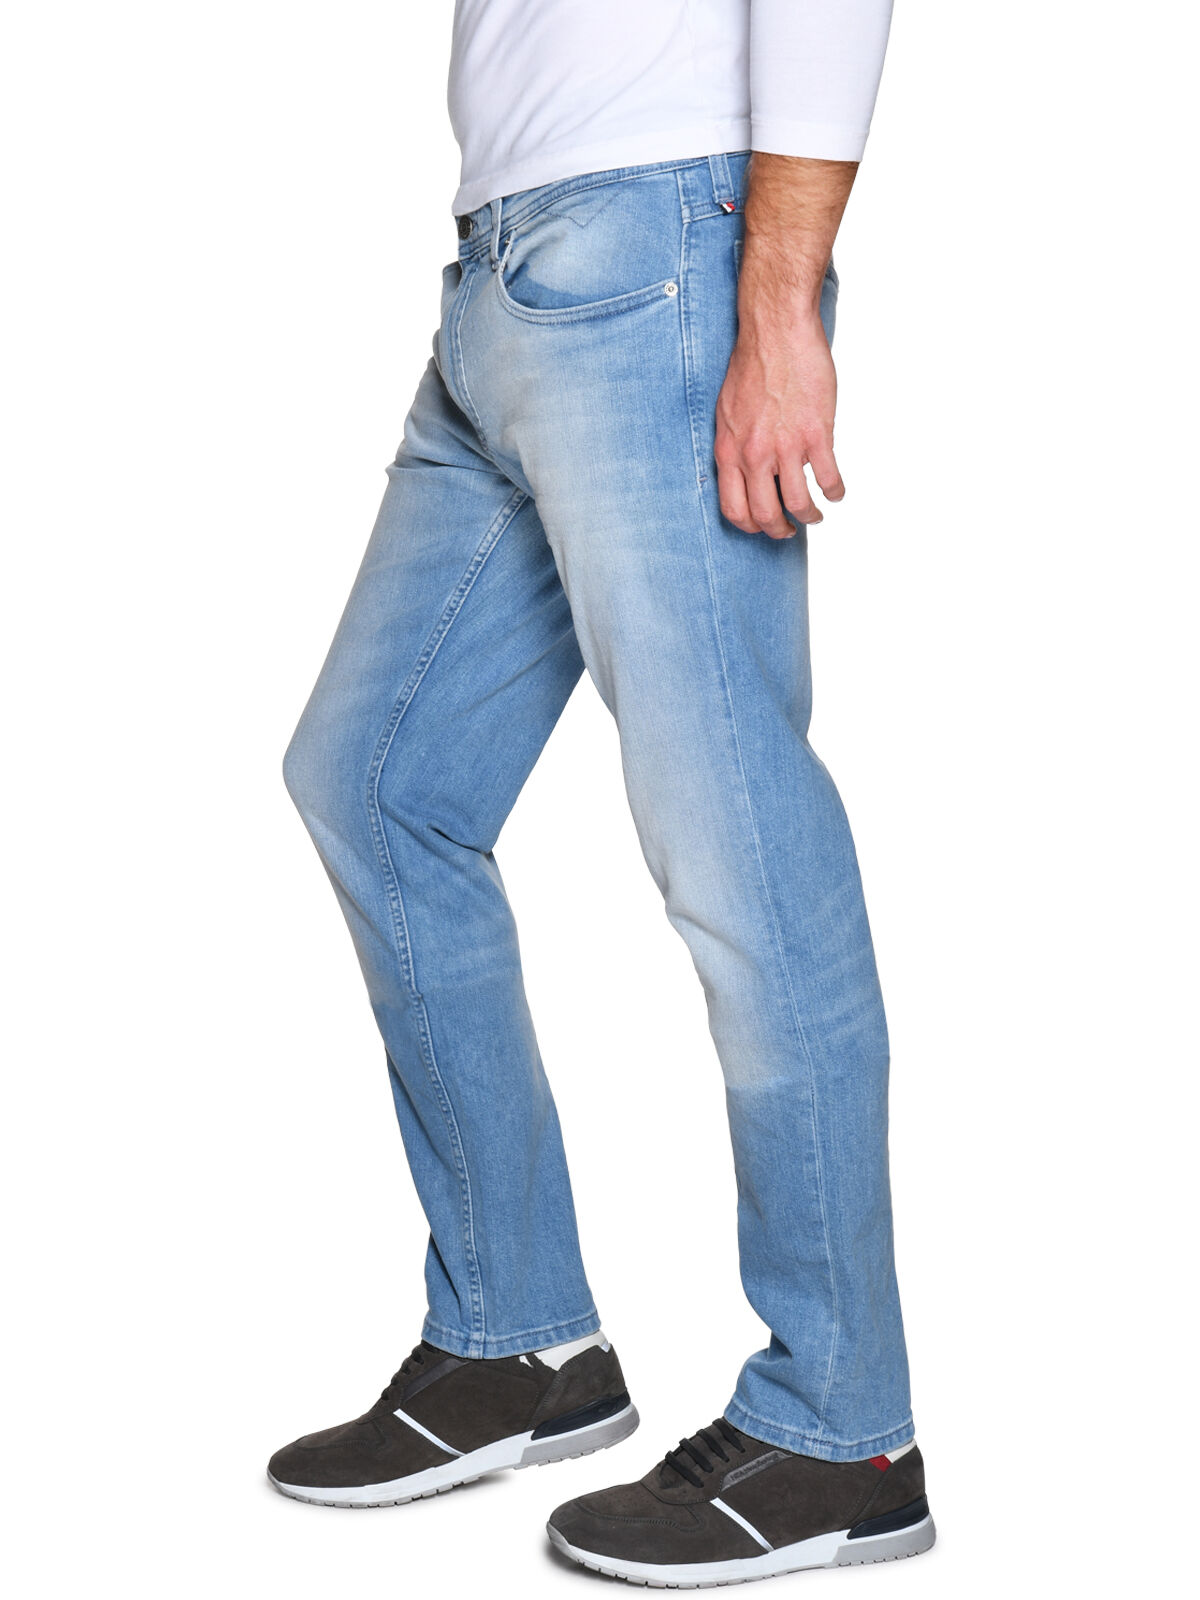 hilfiger ronnie jeans